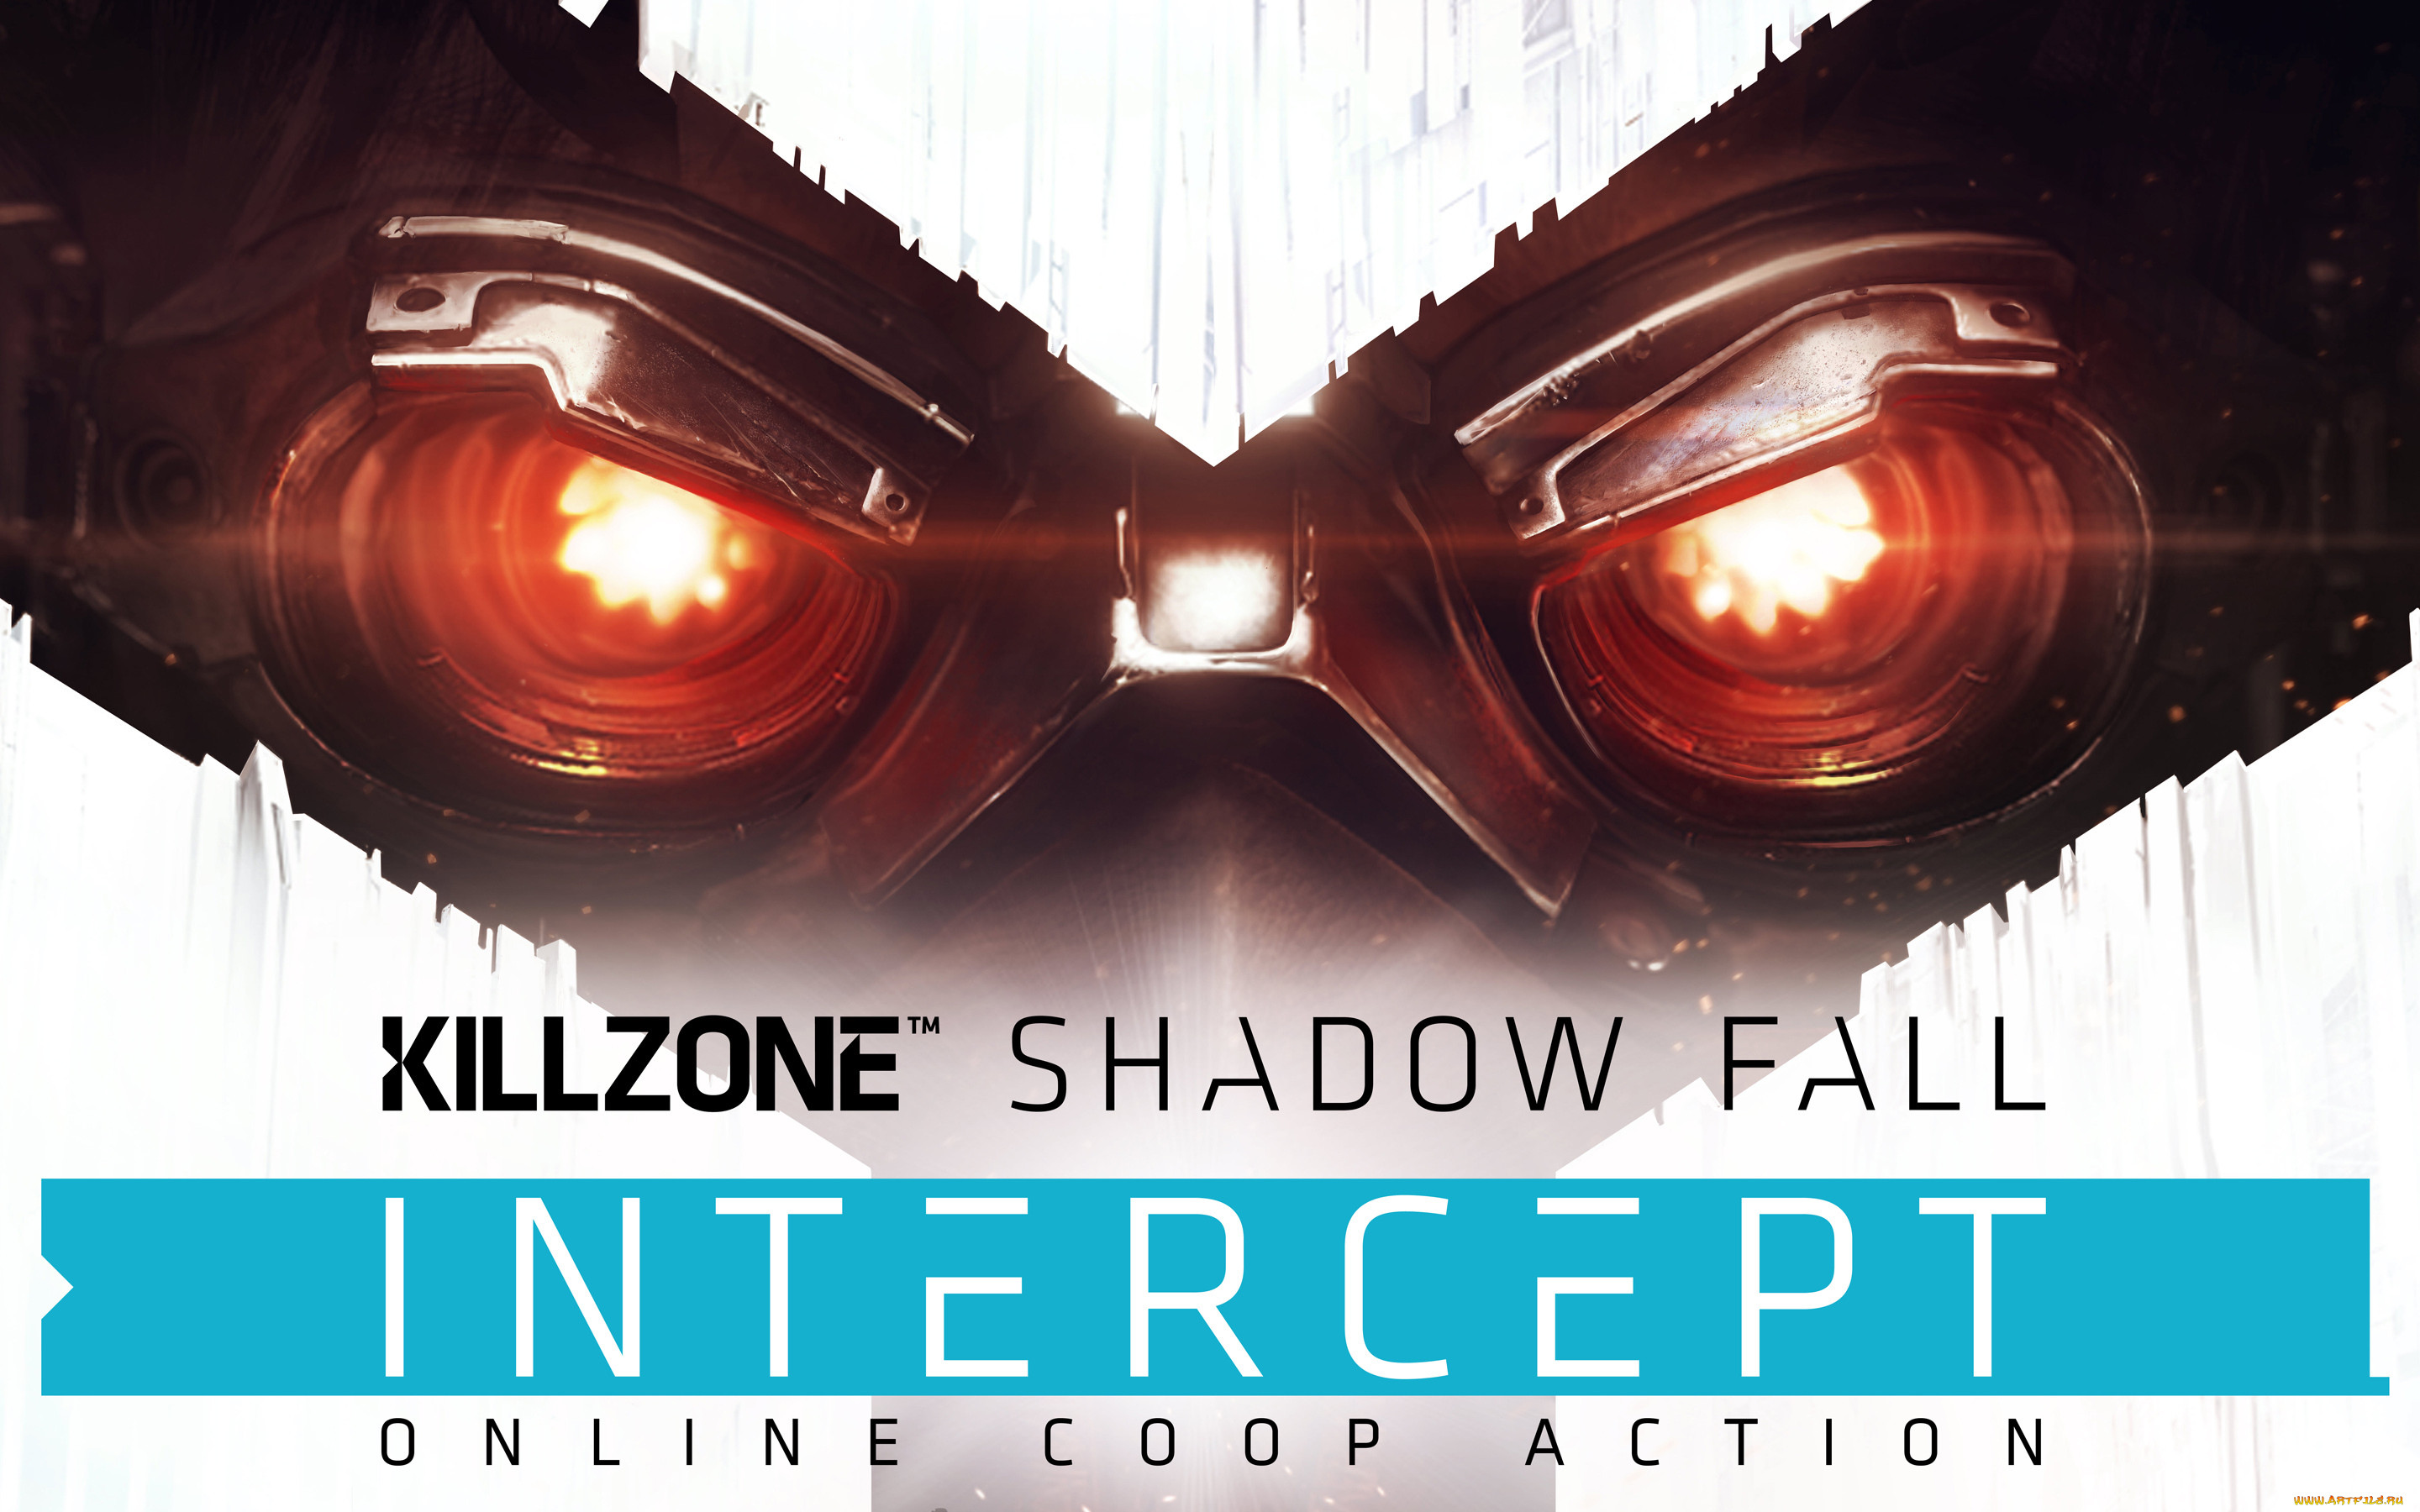  , killzone,  shadow fall - intercept, , , intercept, fall, shadow